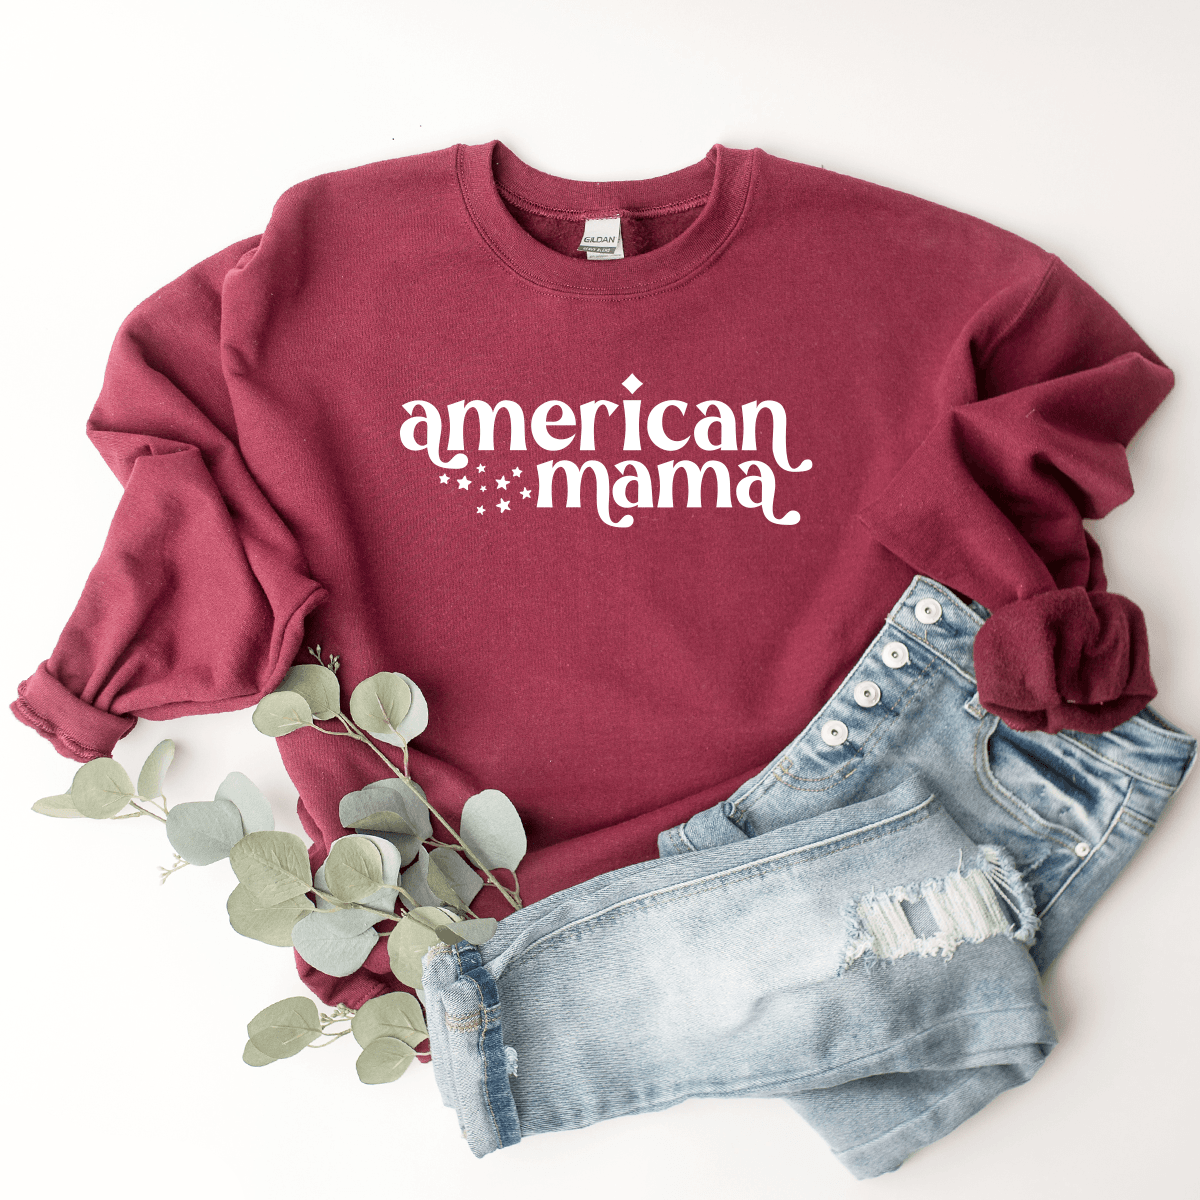 American Mama - Sweatshirt